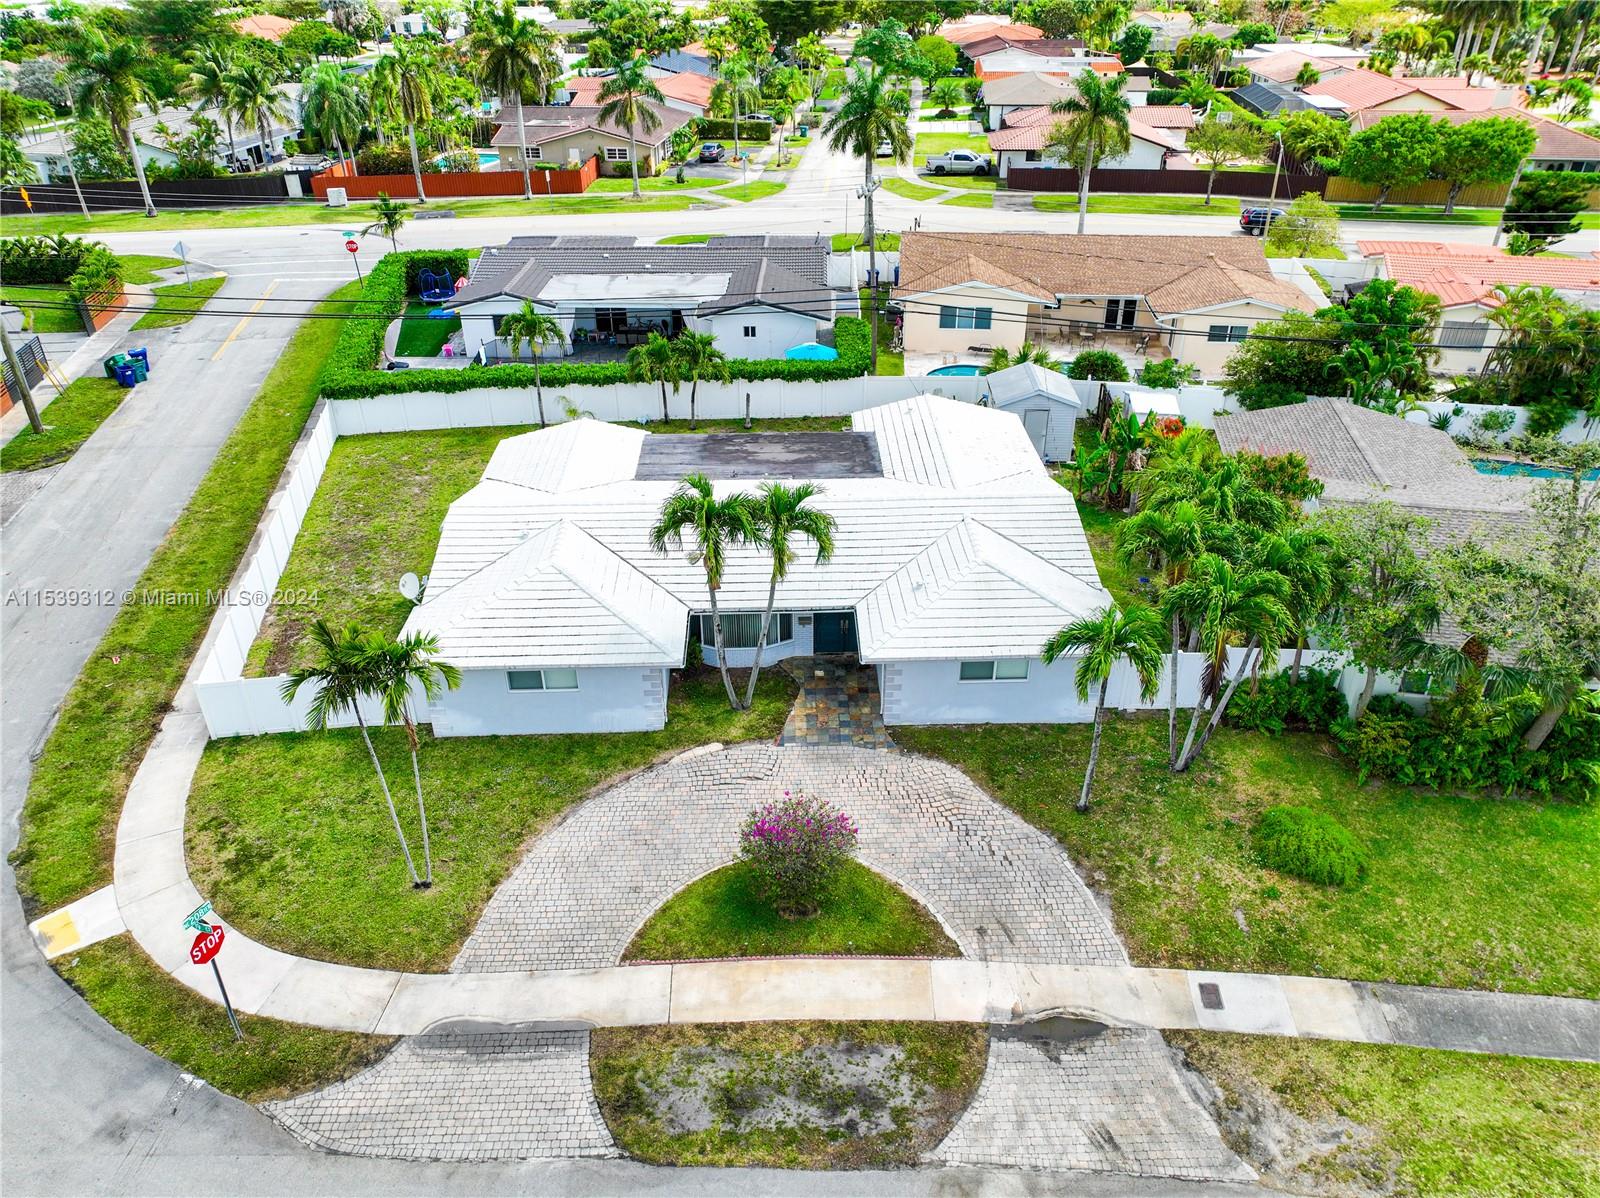 Property for Sale at 20801 Ne 19th Ct Ct, Miami, Broward County, Florida - Bedrooms: 4 
Bathrooms: 3  - $1,200,000